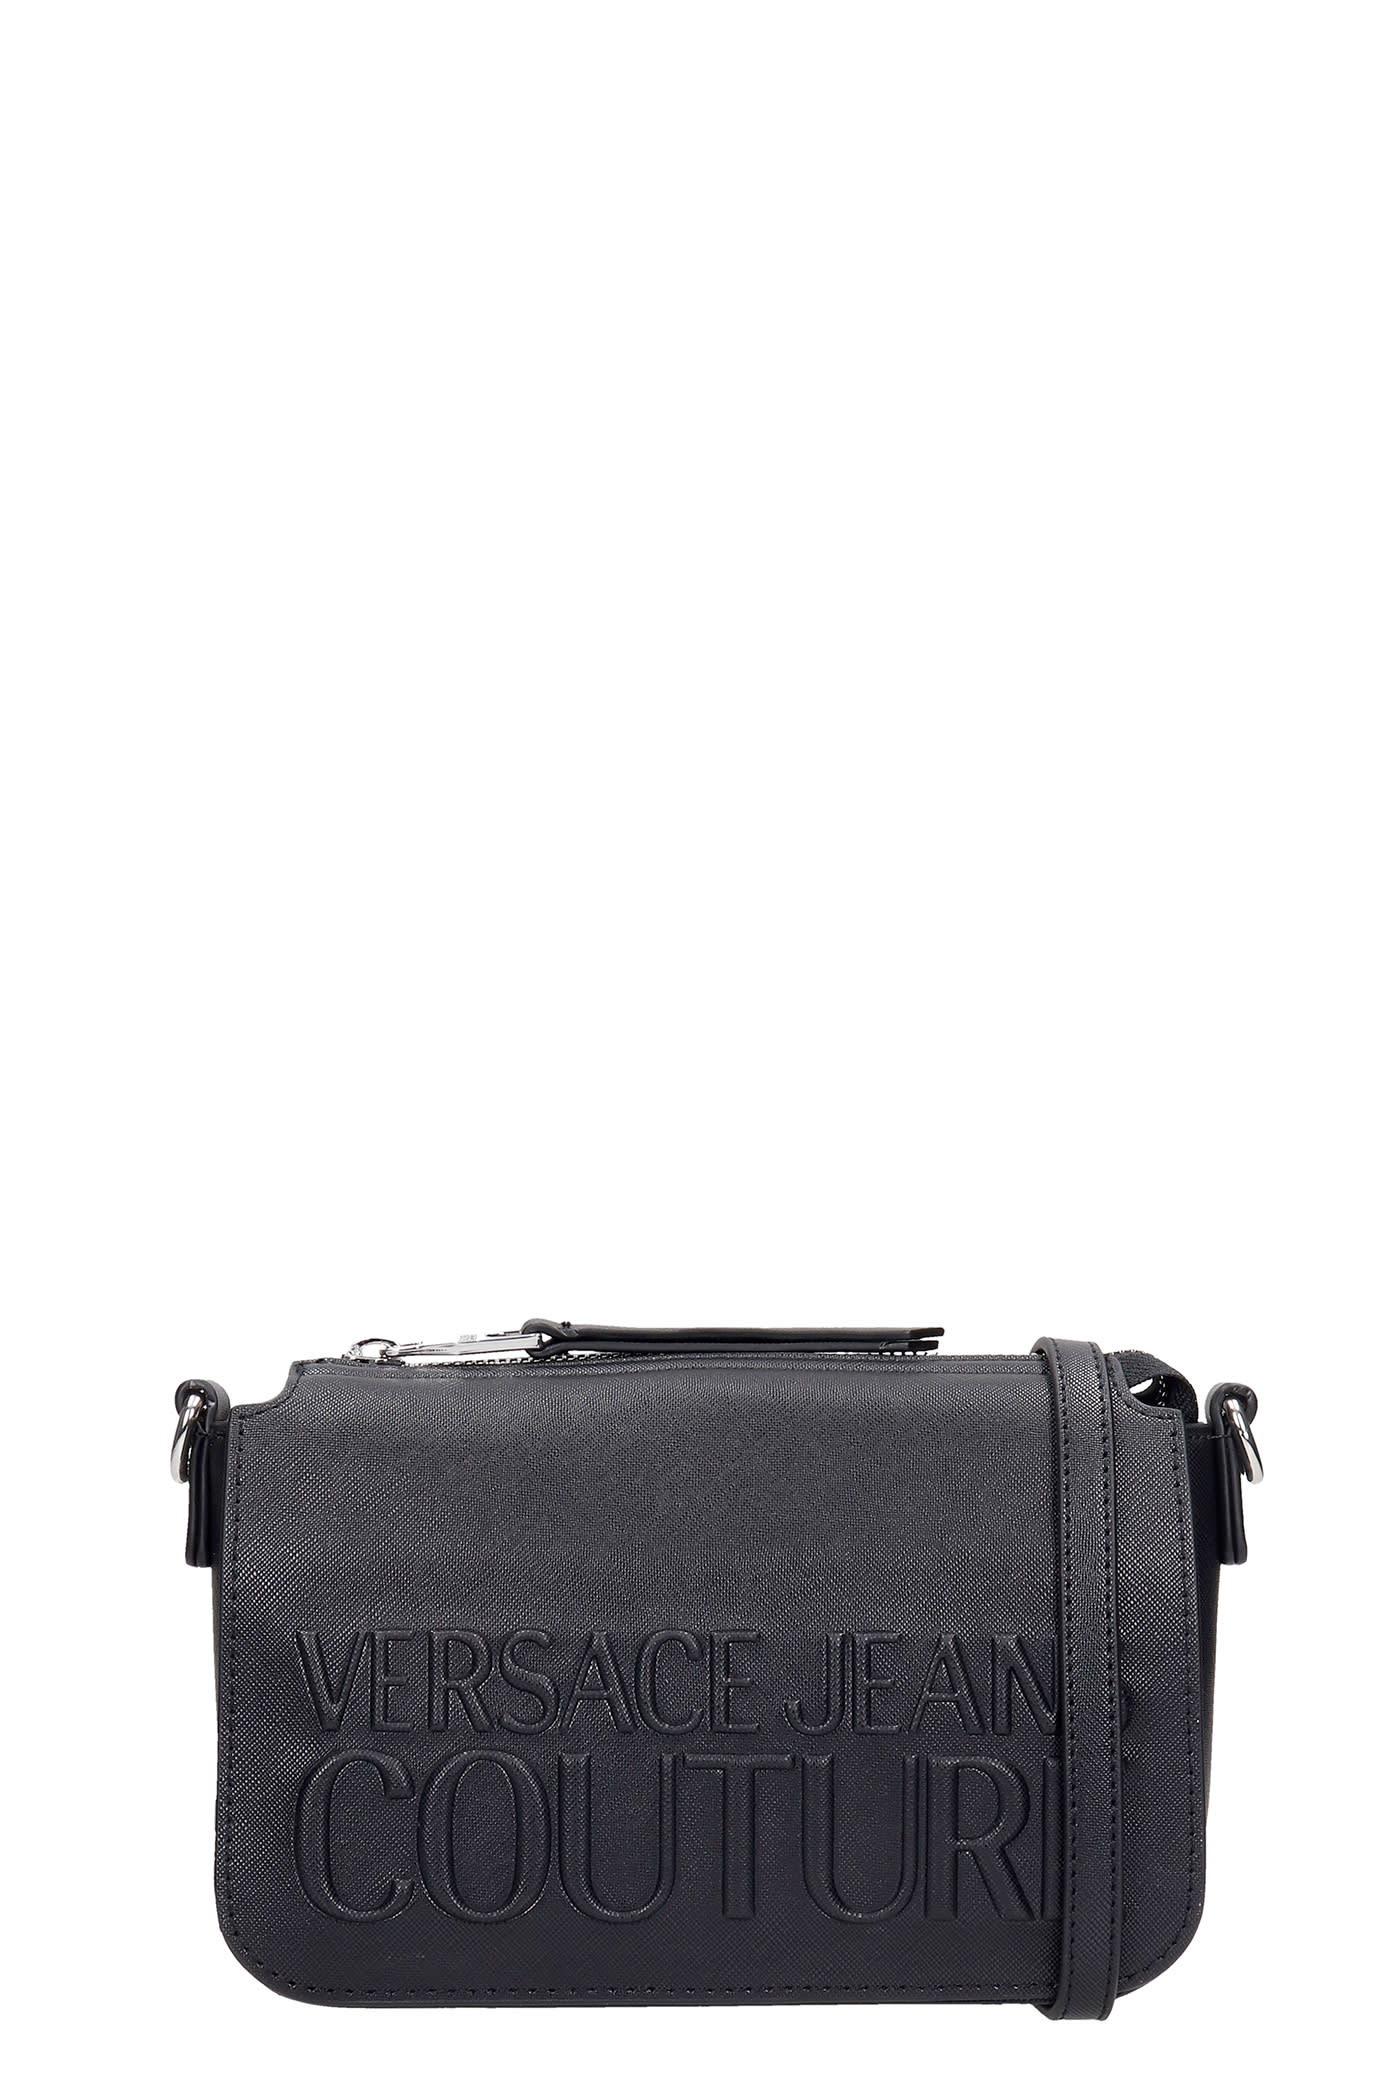 Versace Jeans Couture Shoulder Bag In Black Polyester